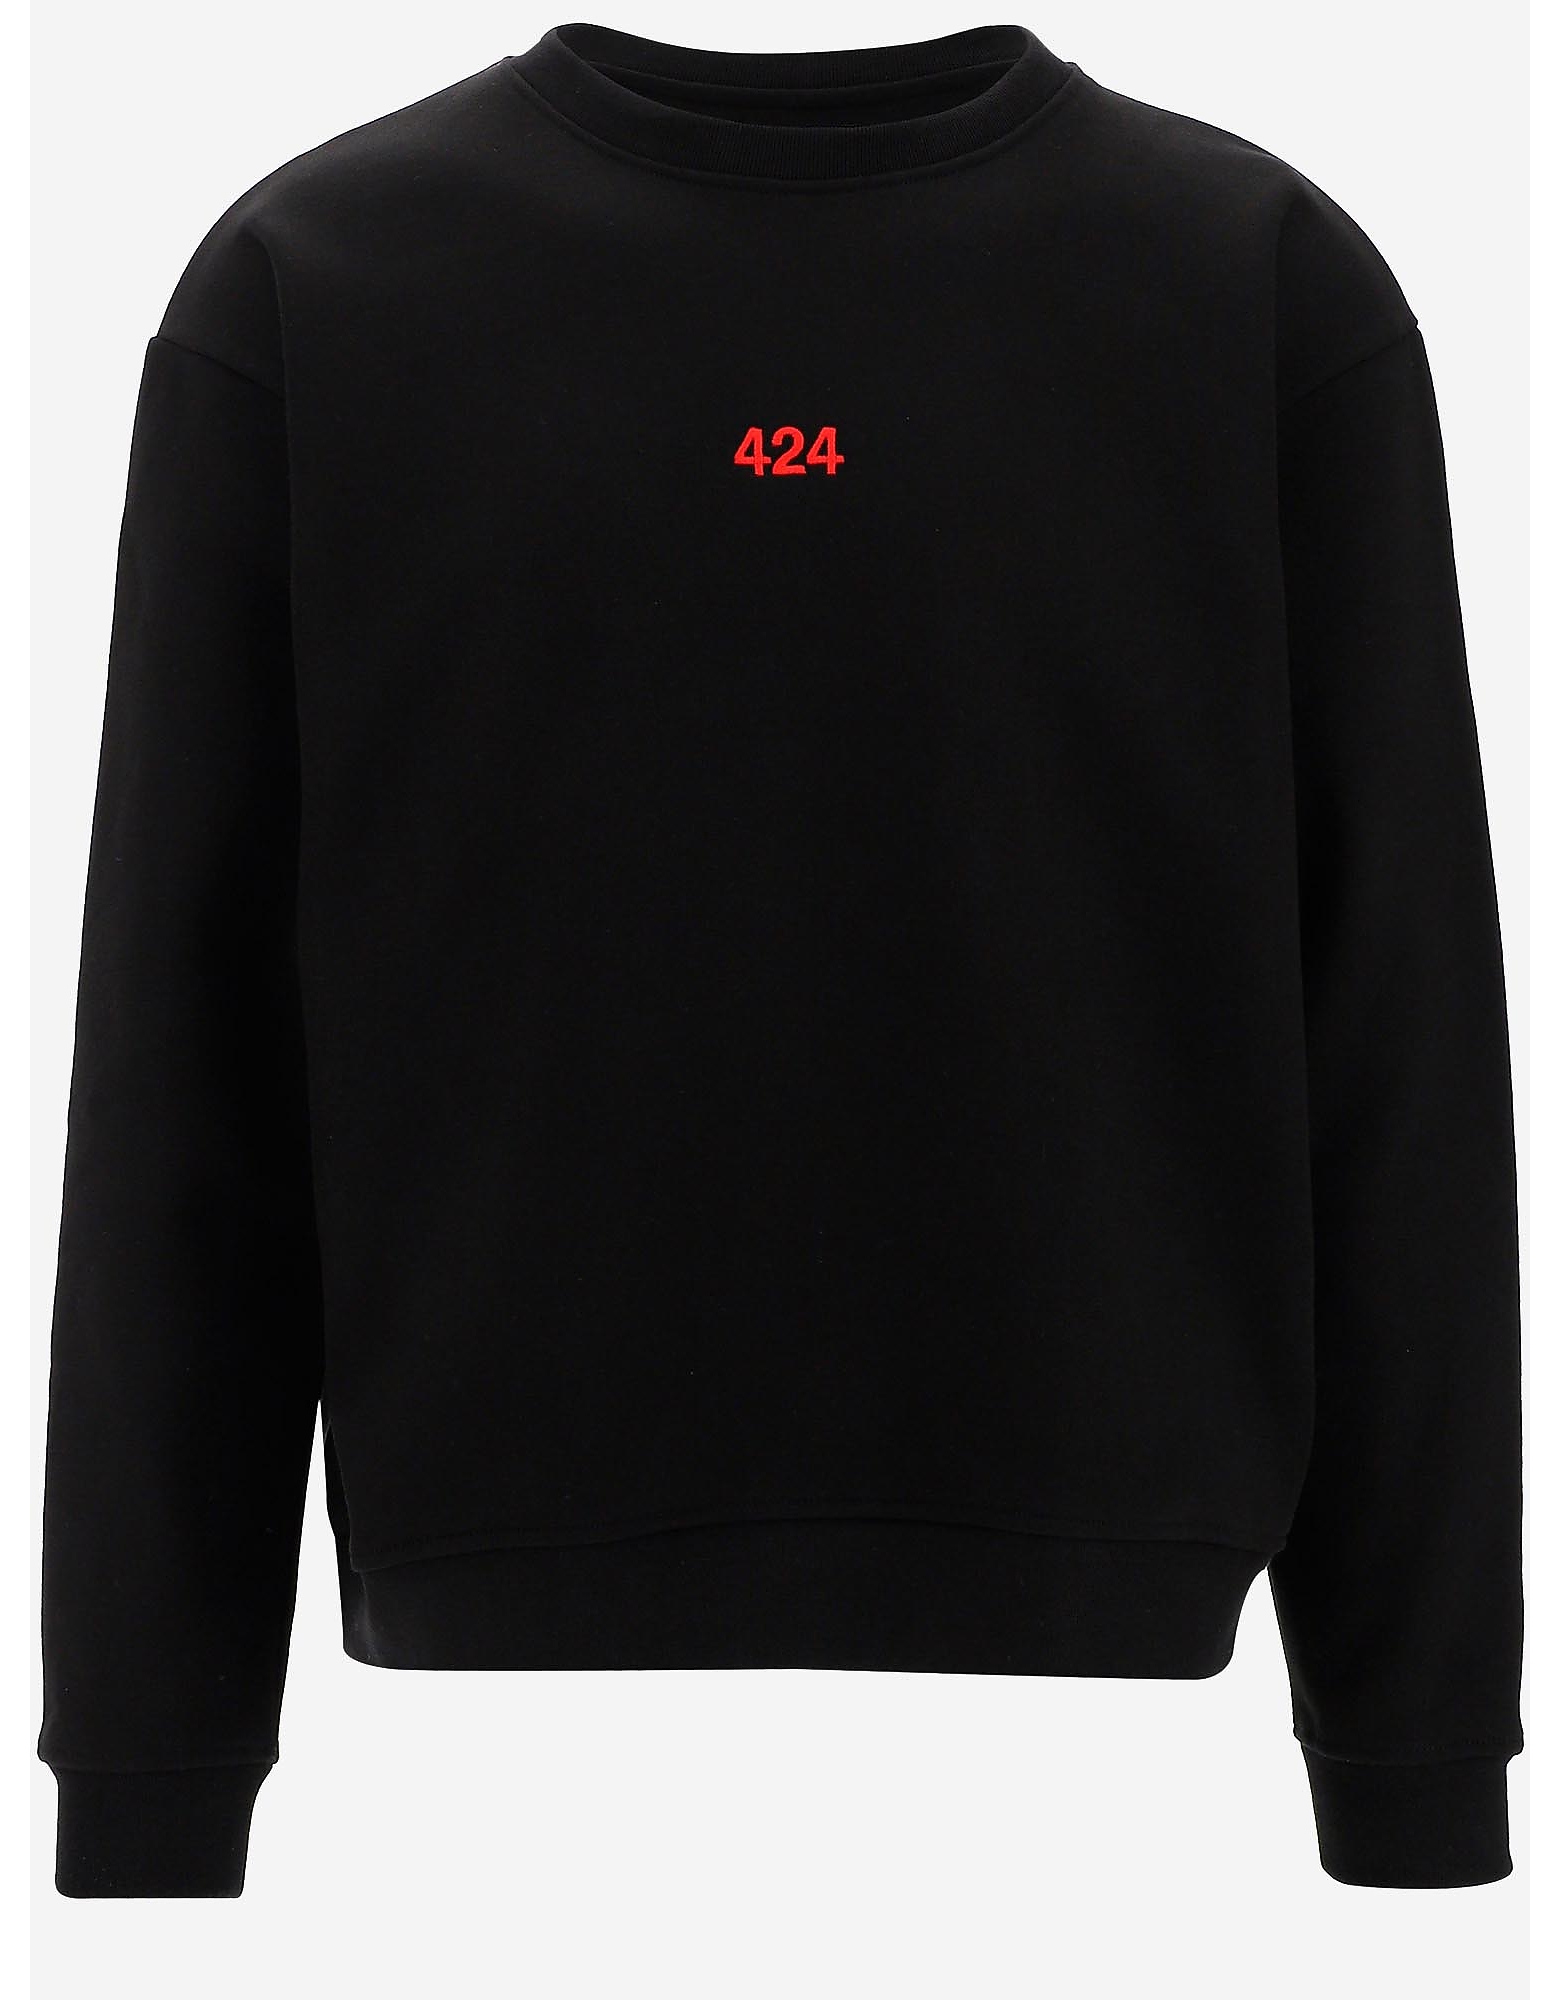 424 Designer Sweatshirts, 424 Black Cotton Men's Sweatshirt